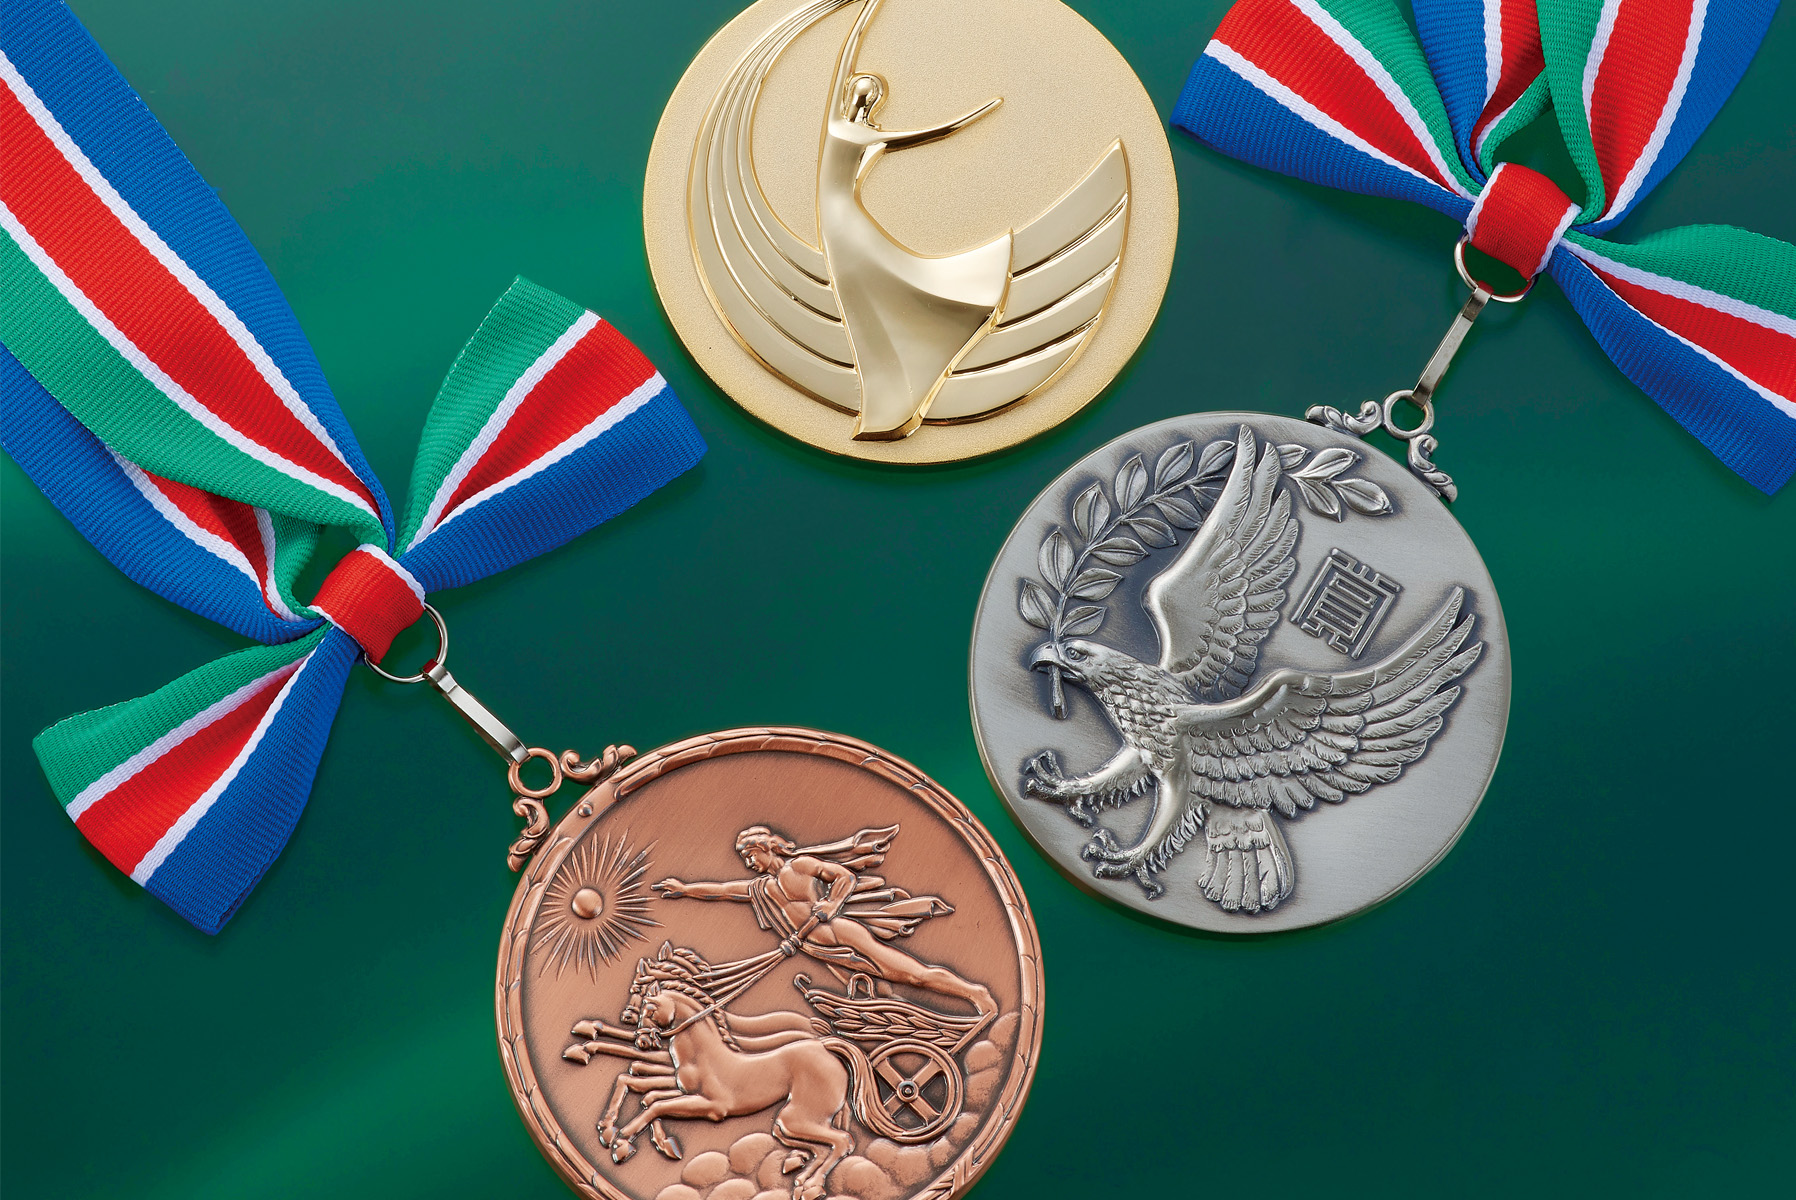 JAS-RLM-77 色は金メダル・銀メダル・銅メダルの3種類から選べ、9種類の図柄選択が可能な高級感漂う大きなメダル